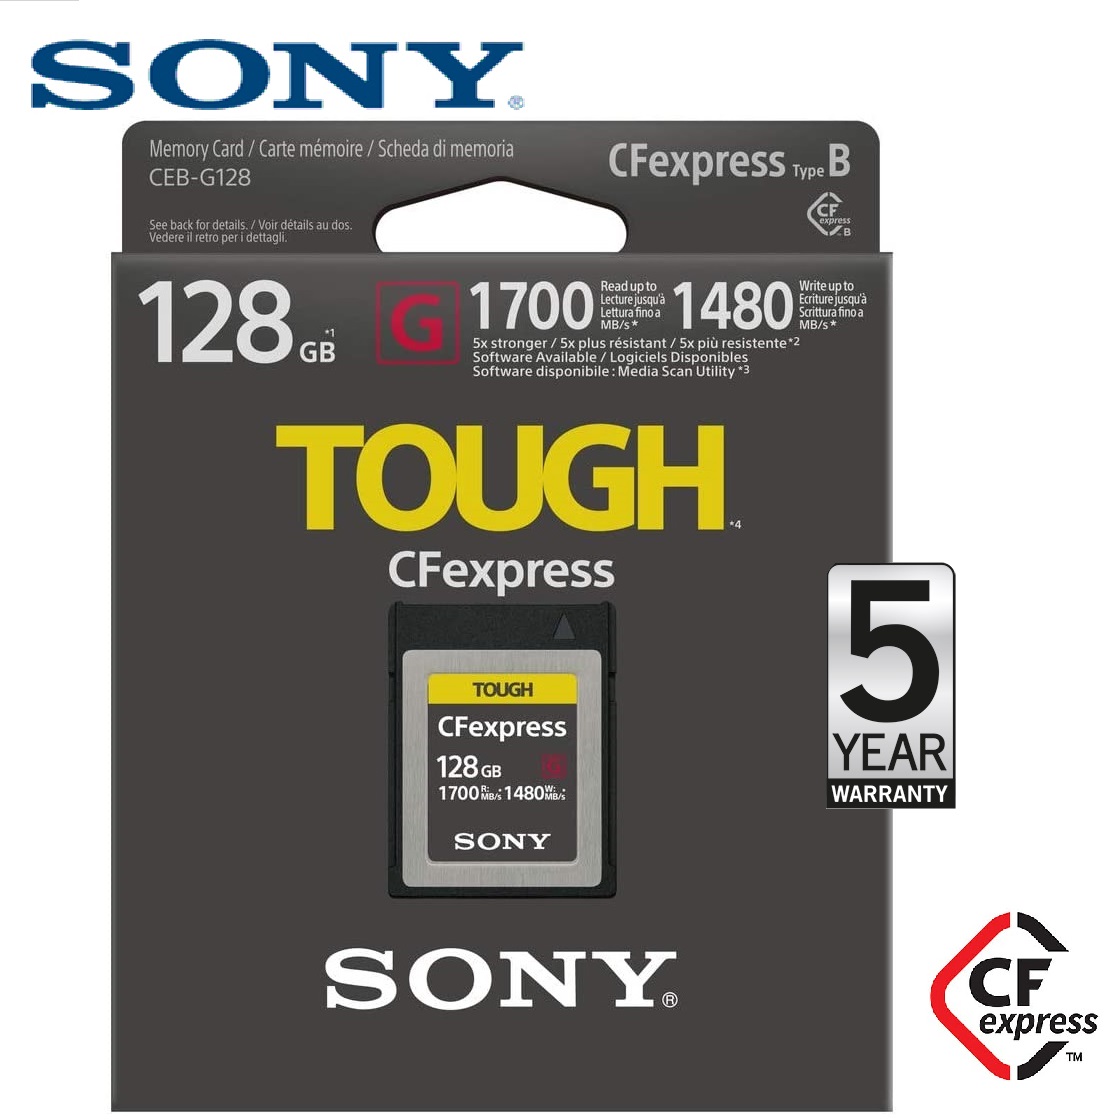 Sony 128GB CF Express TOUGH Type B